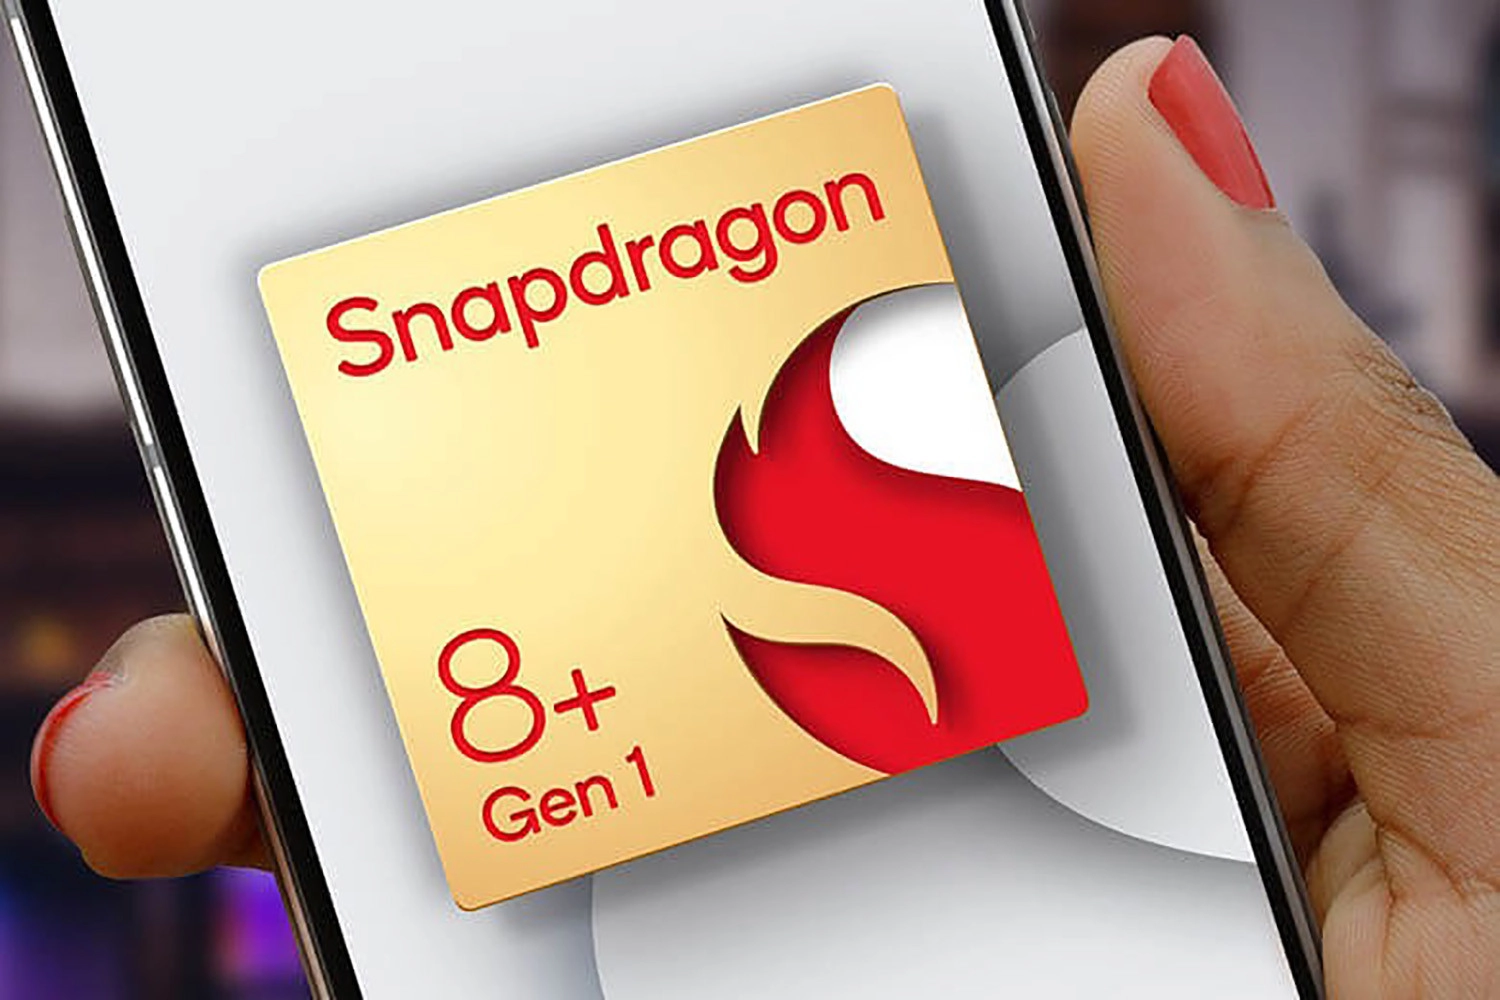 Snapdragon 8 Plus Gen 1